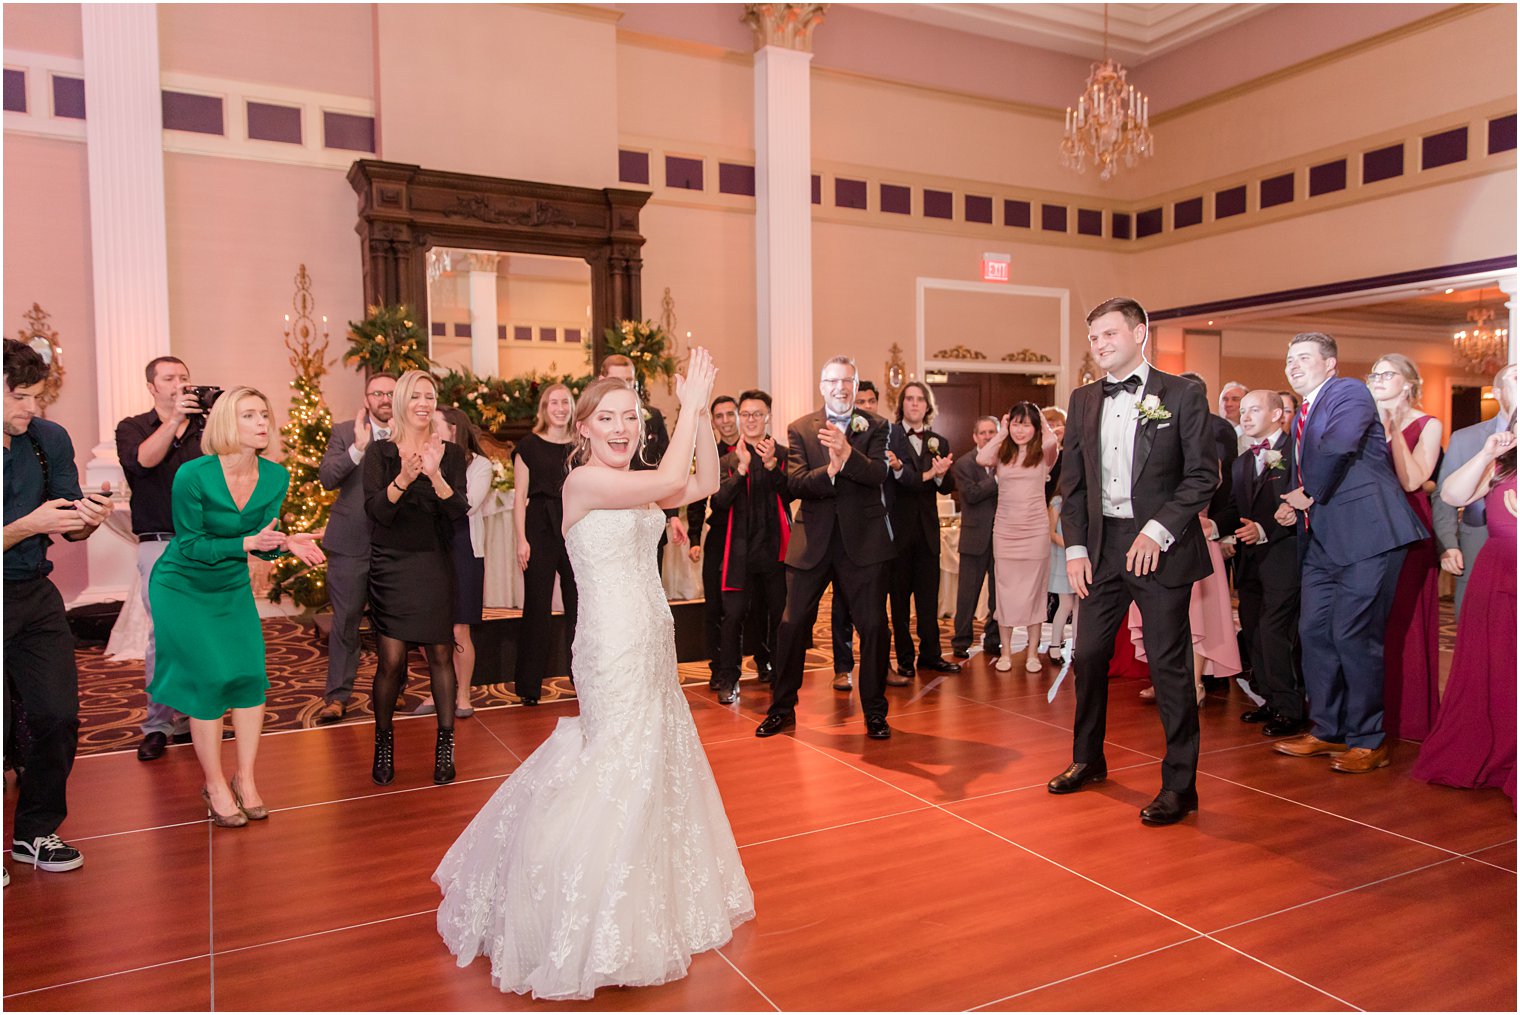 Guests dancing at wedding reception at The Palace at Somerset Park in Somerset NJ